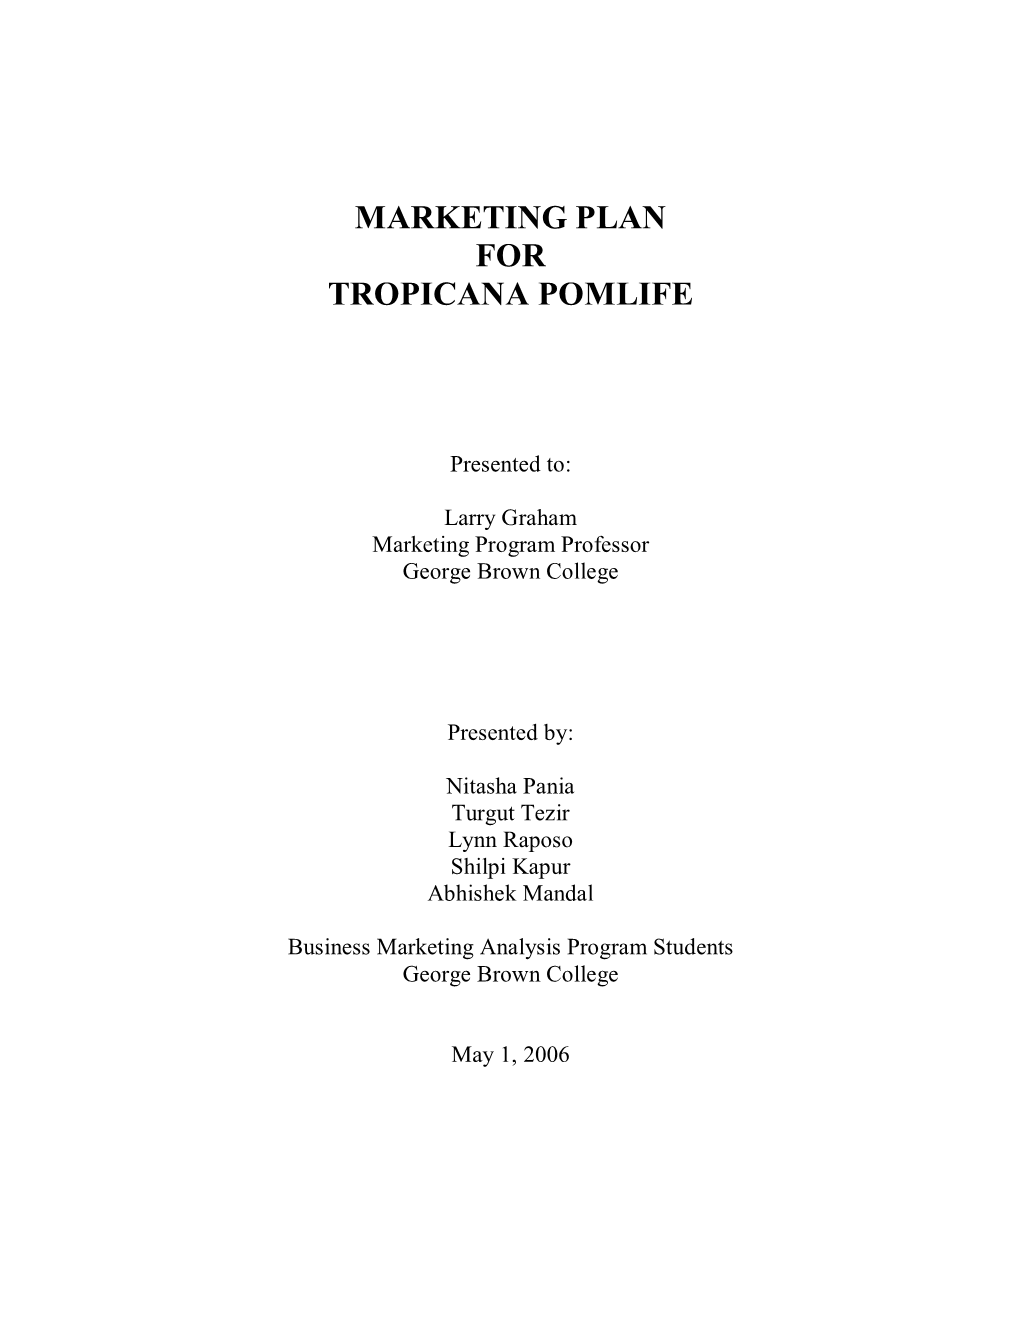 Marketing Plan for Tropicana Pomlife